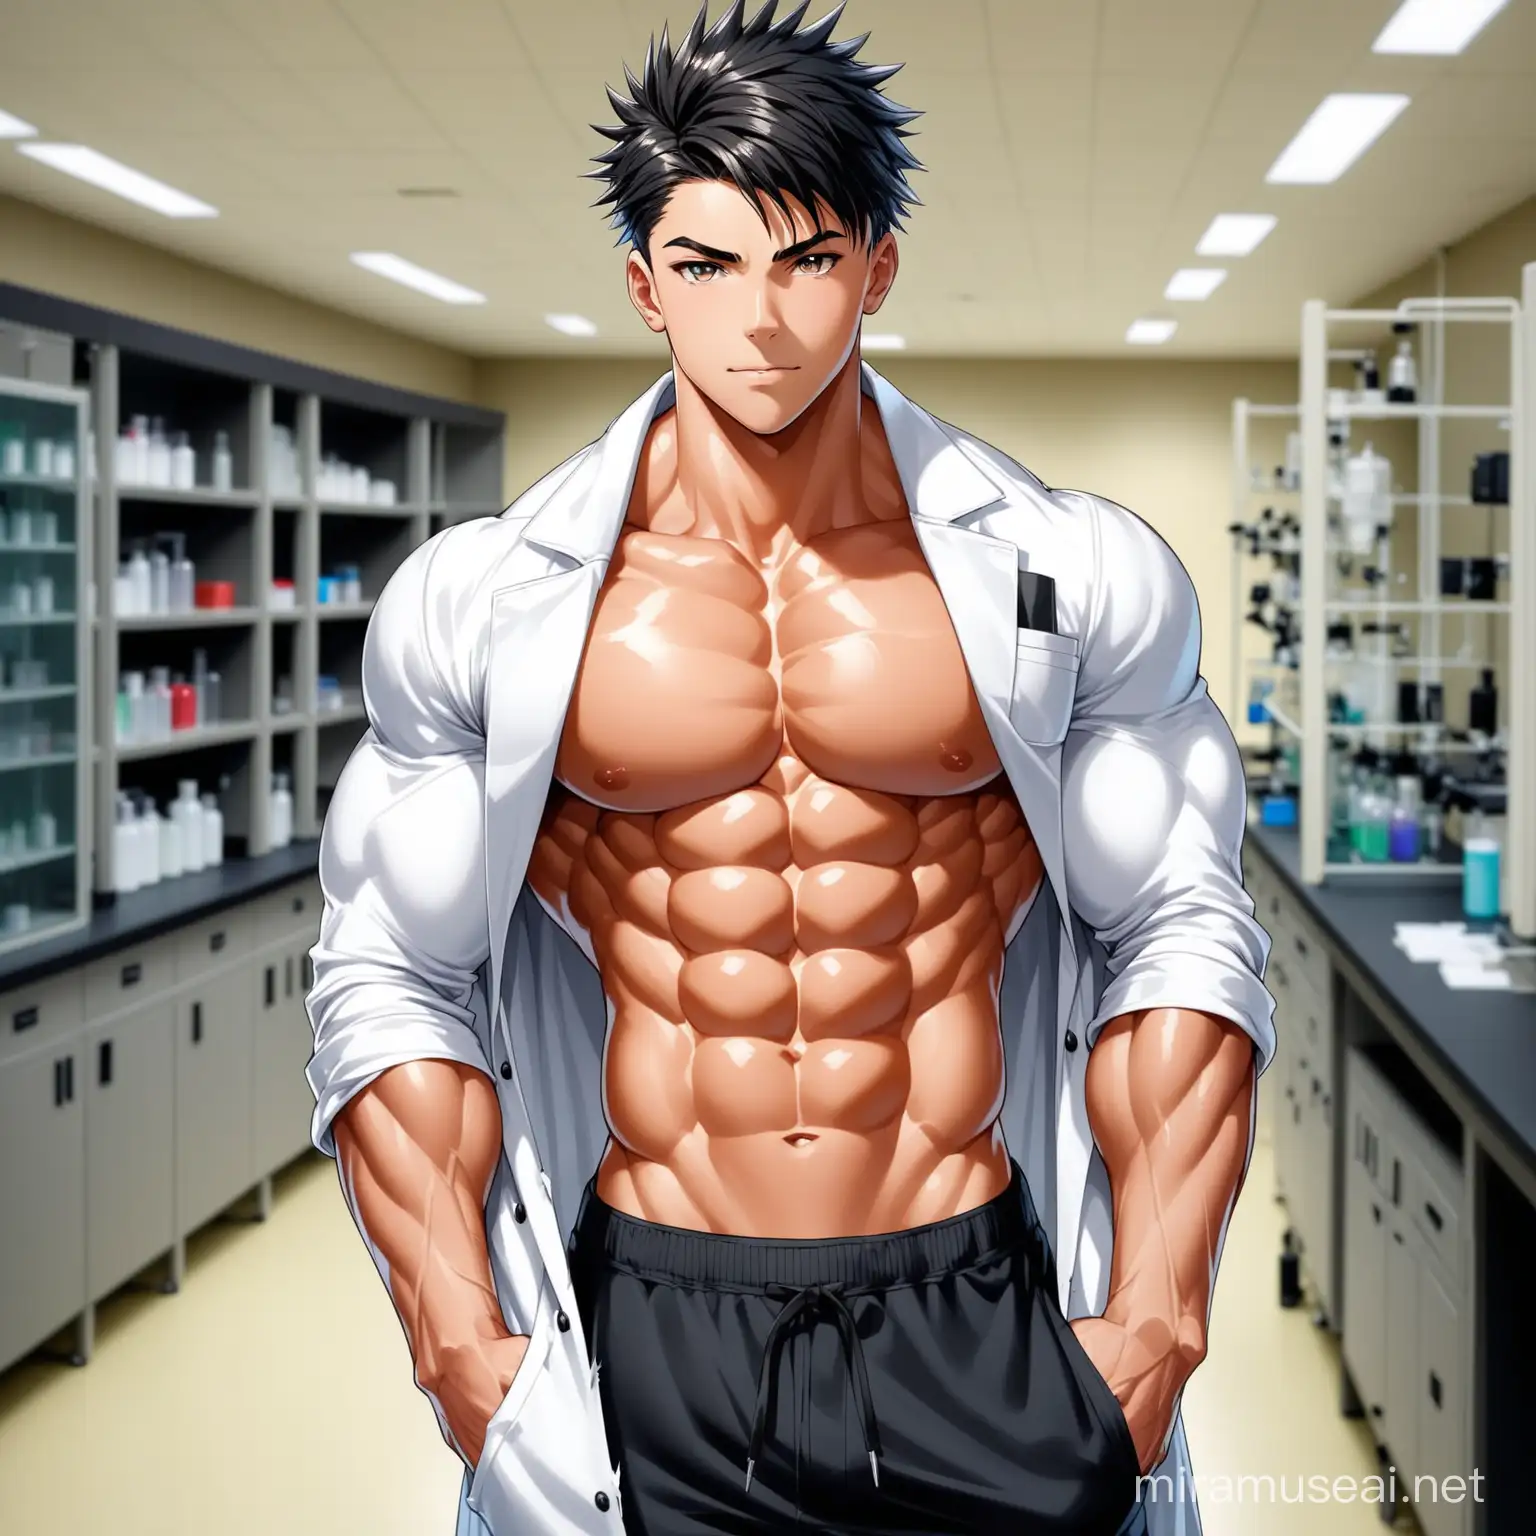 Muscular Teenage Scientist in Torn Lab Coat Amid Laboratory Scenery